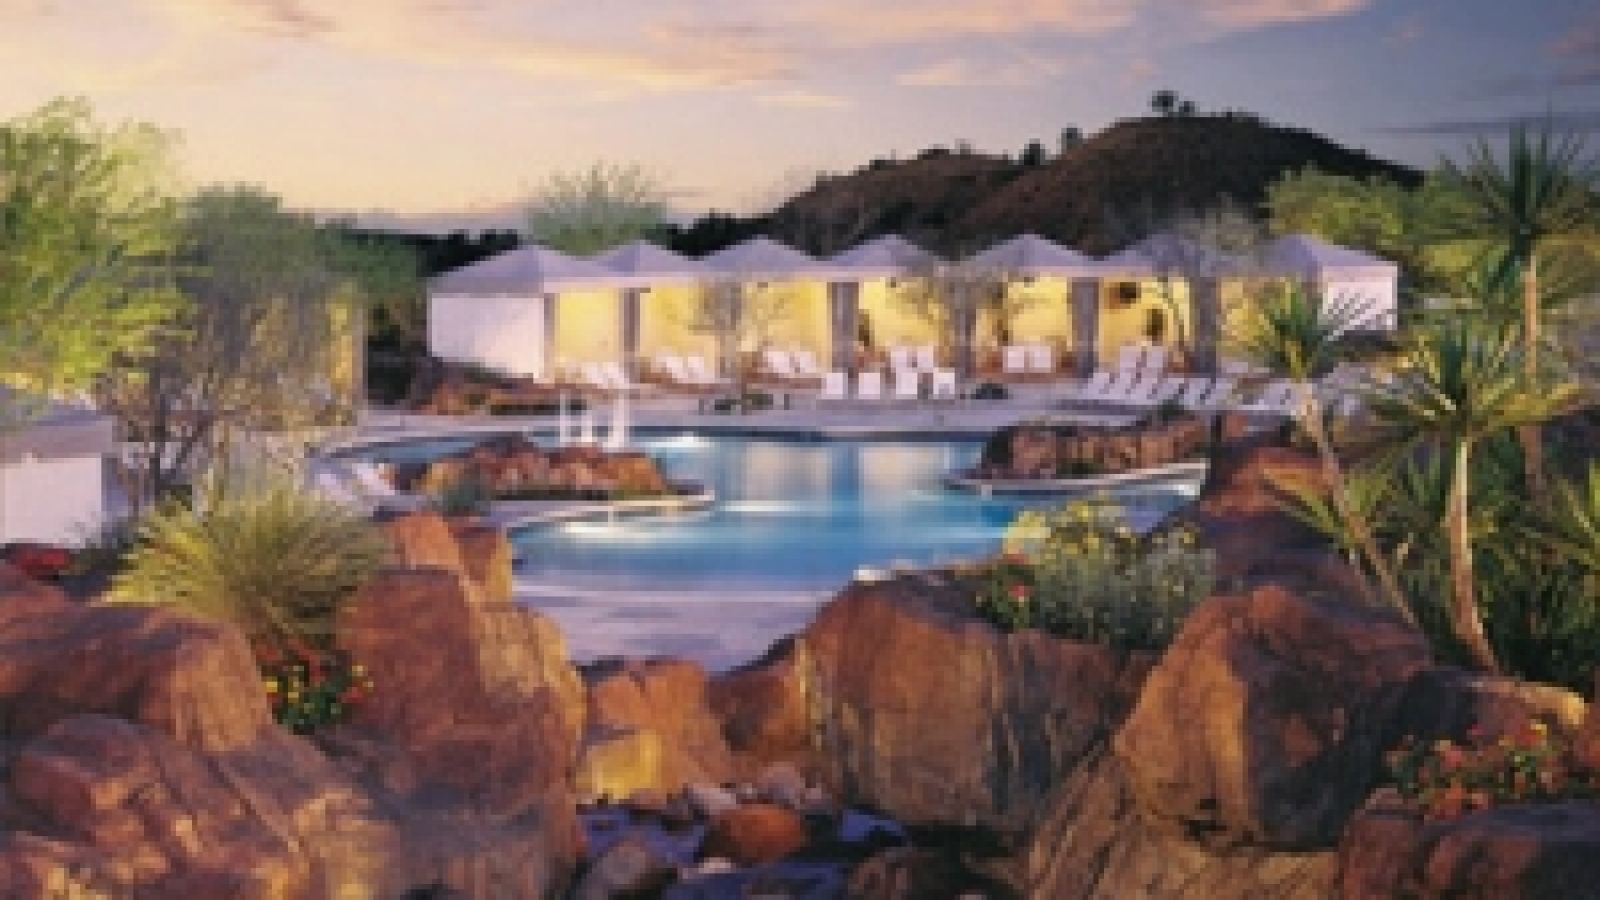 Pointe Hilton Tapatio Cliffs Resort - Arizona golf packages